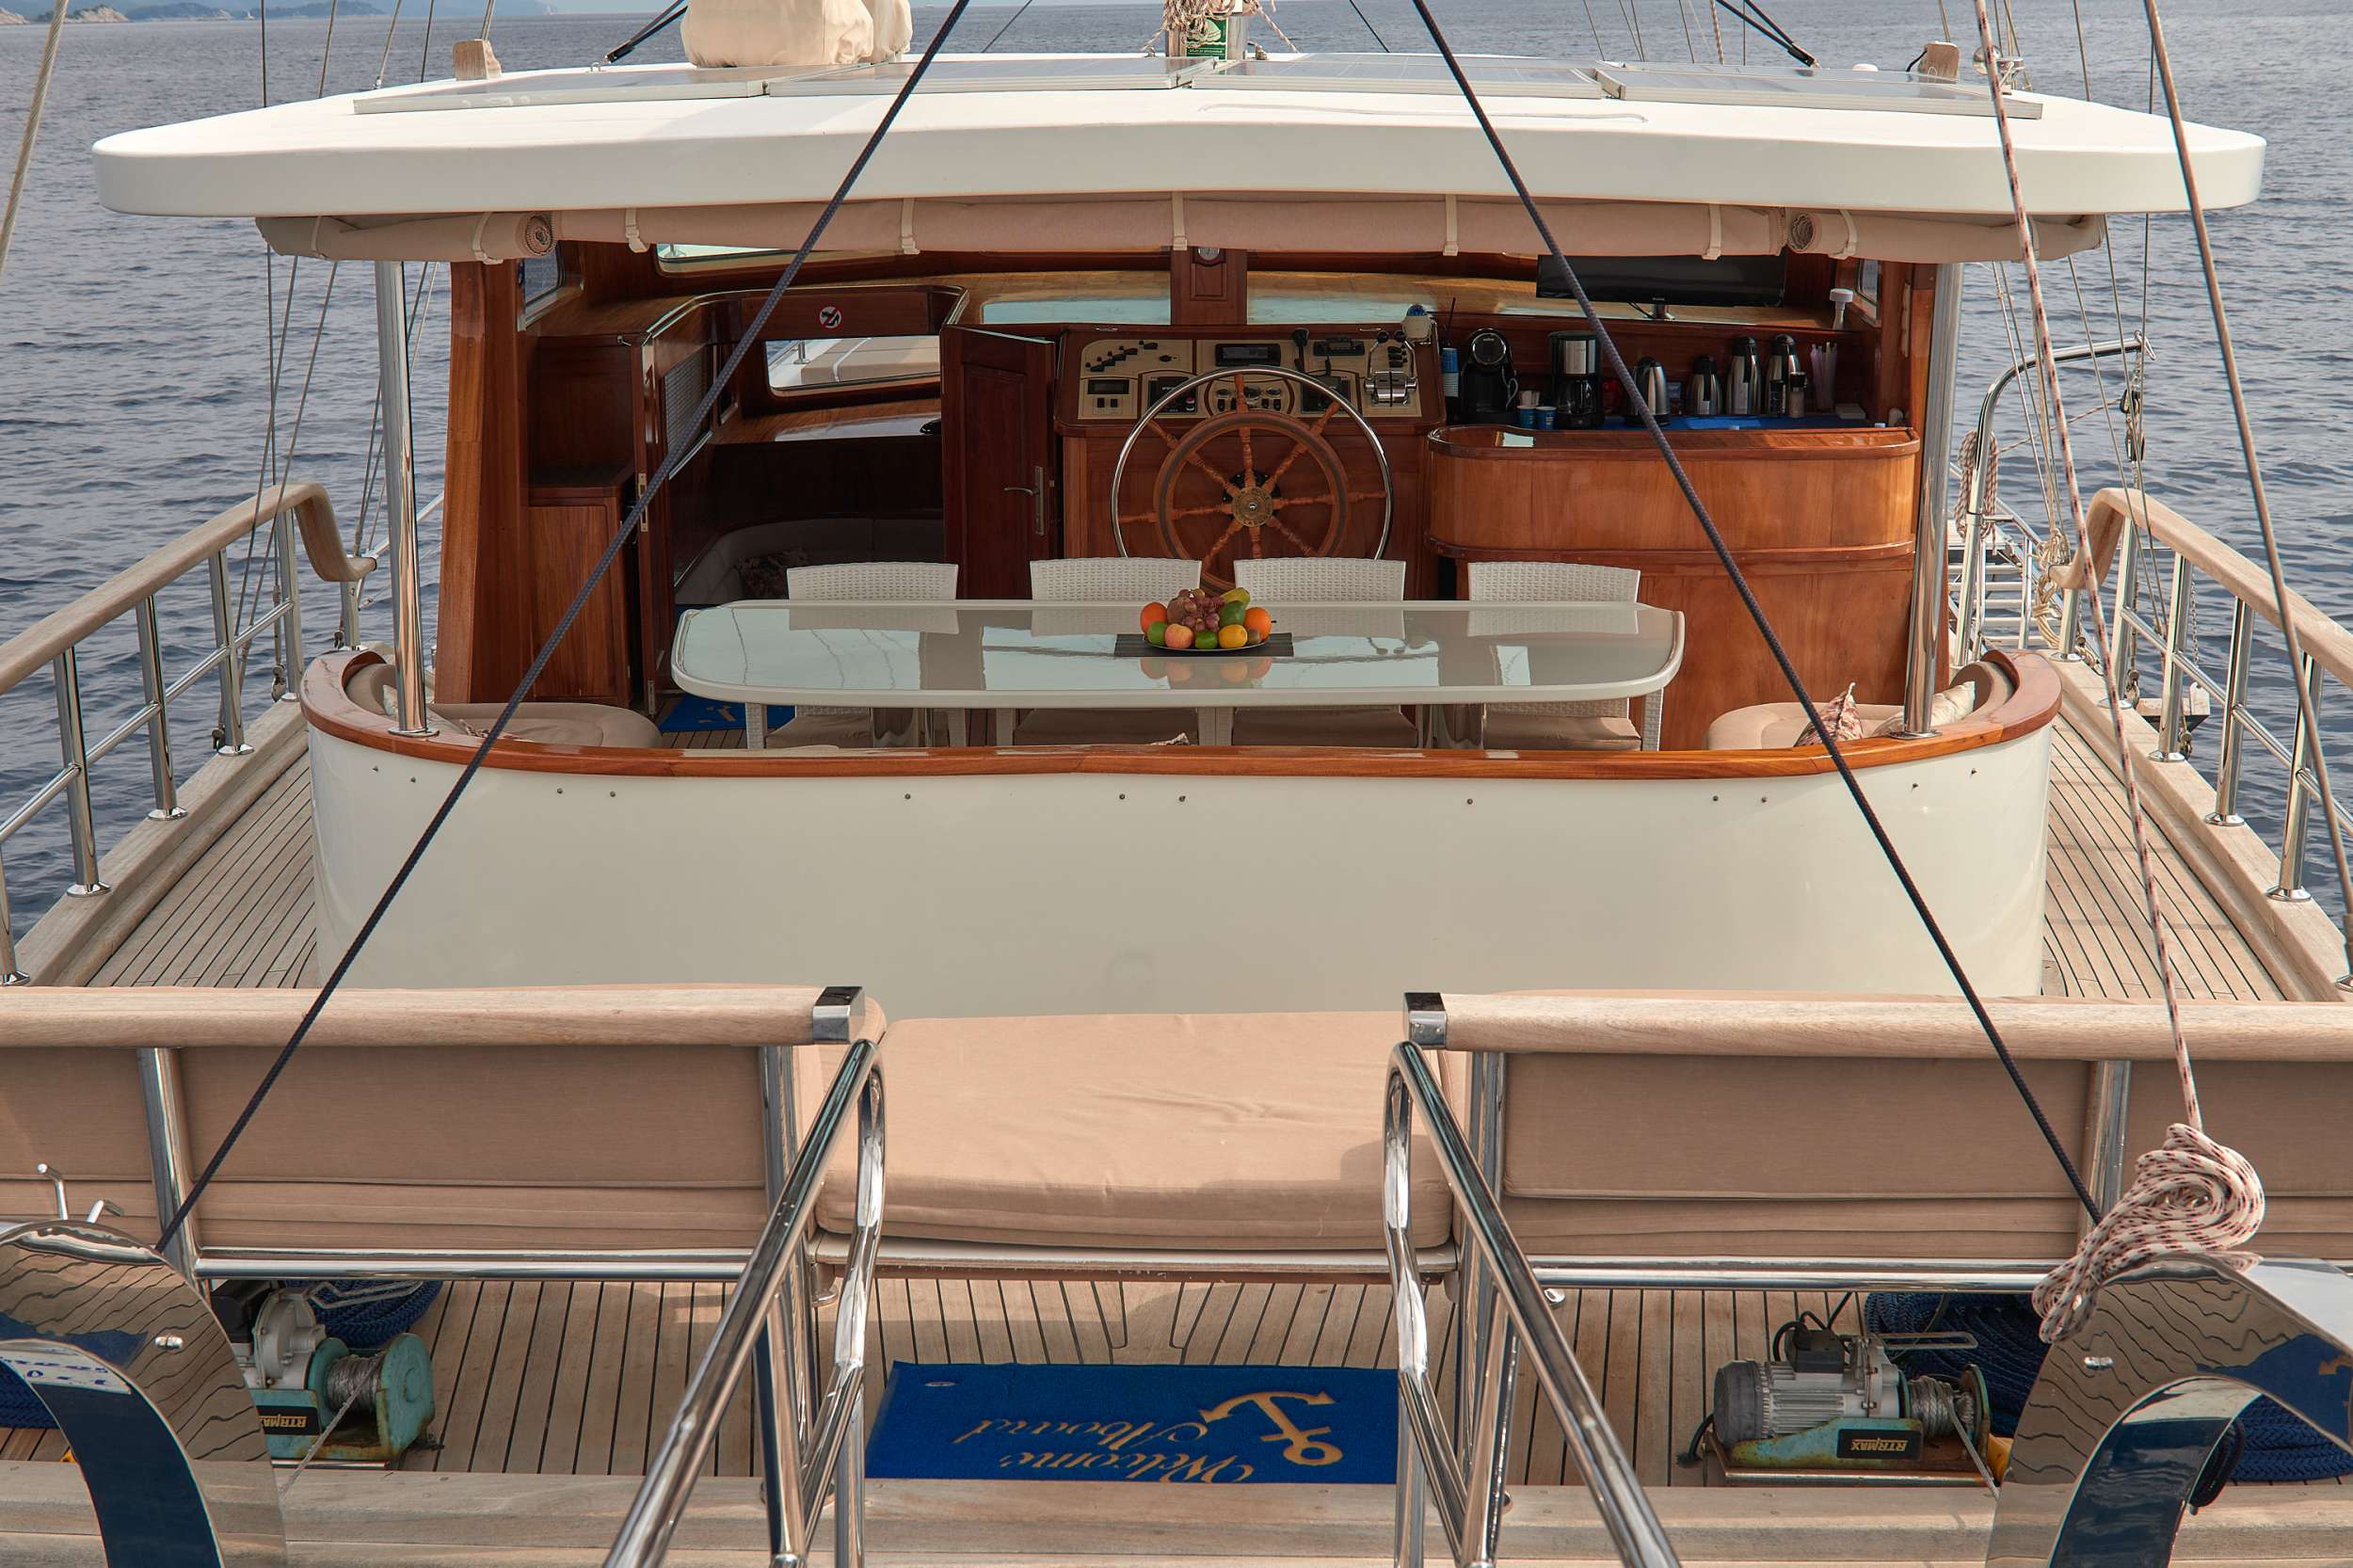 SEA BREEZE - Yacht Charter Banjole & Boat hire in Croatia 4